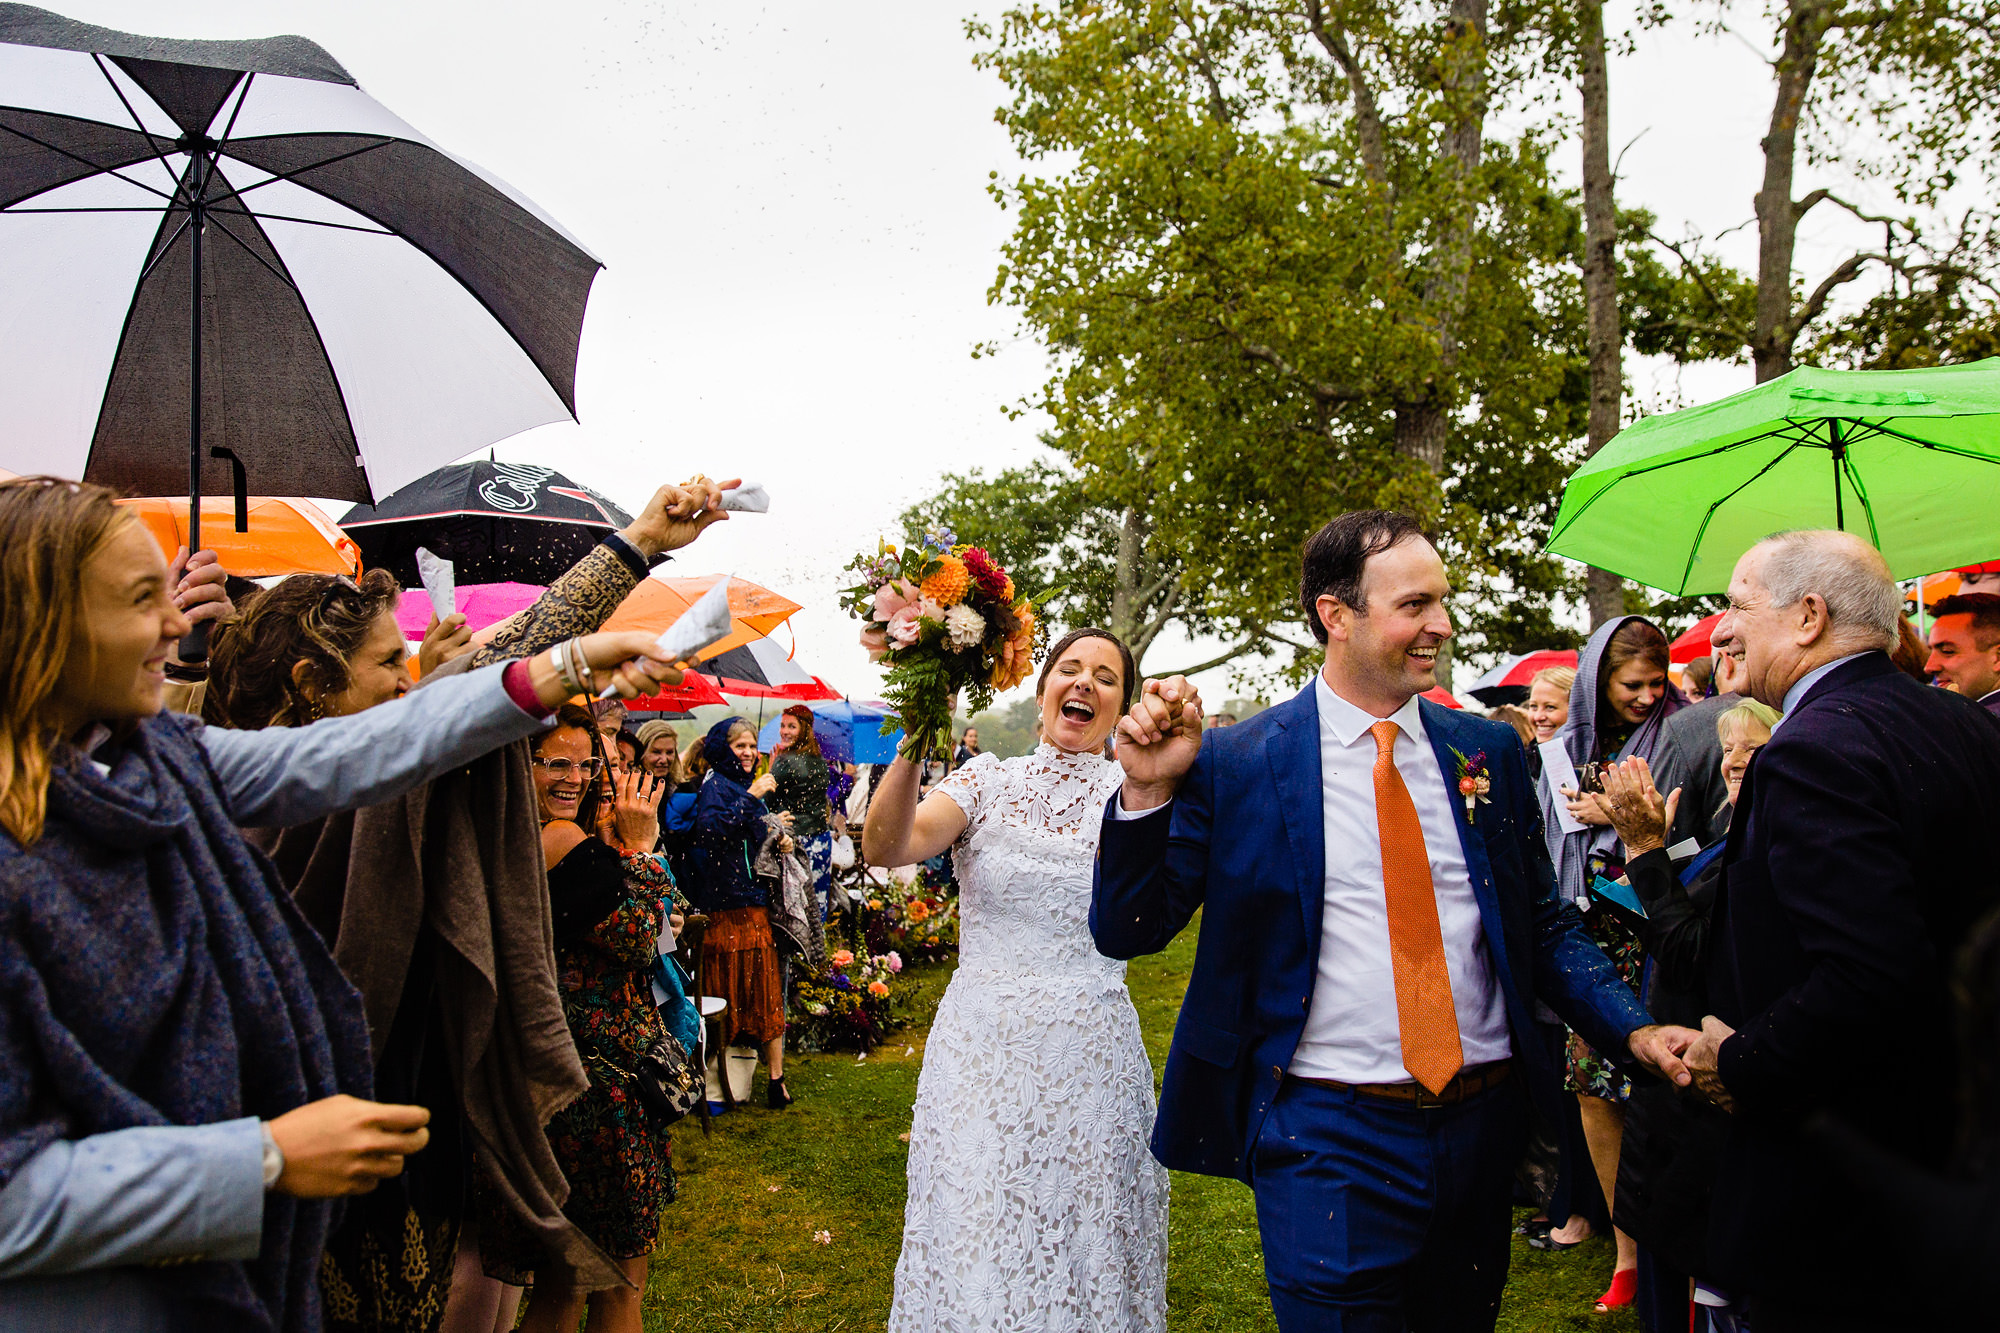 A colorful midcoast Maine rainy wedding